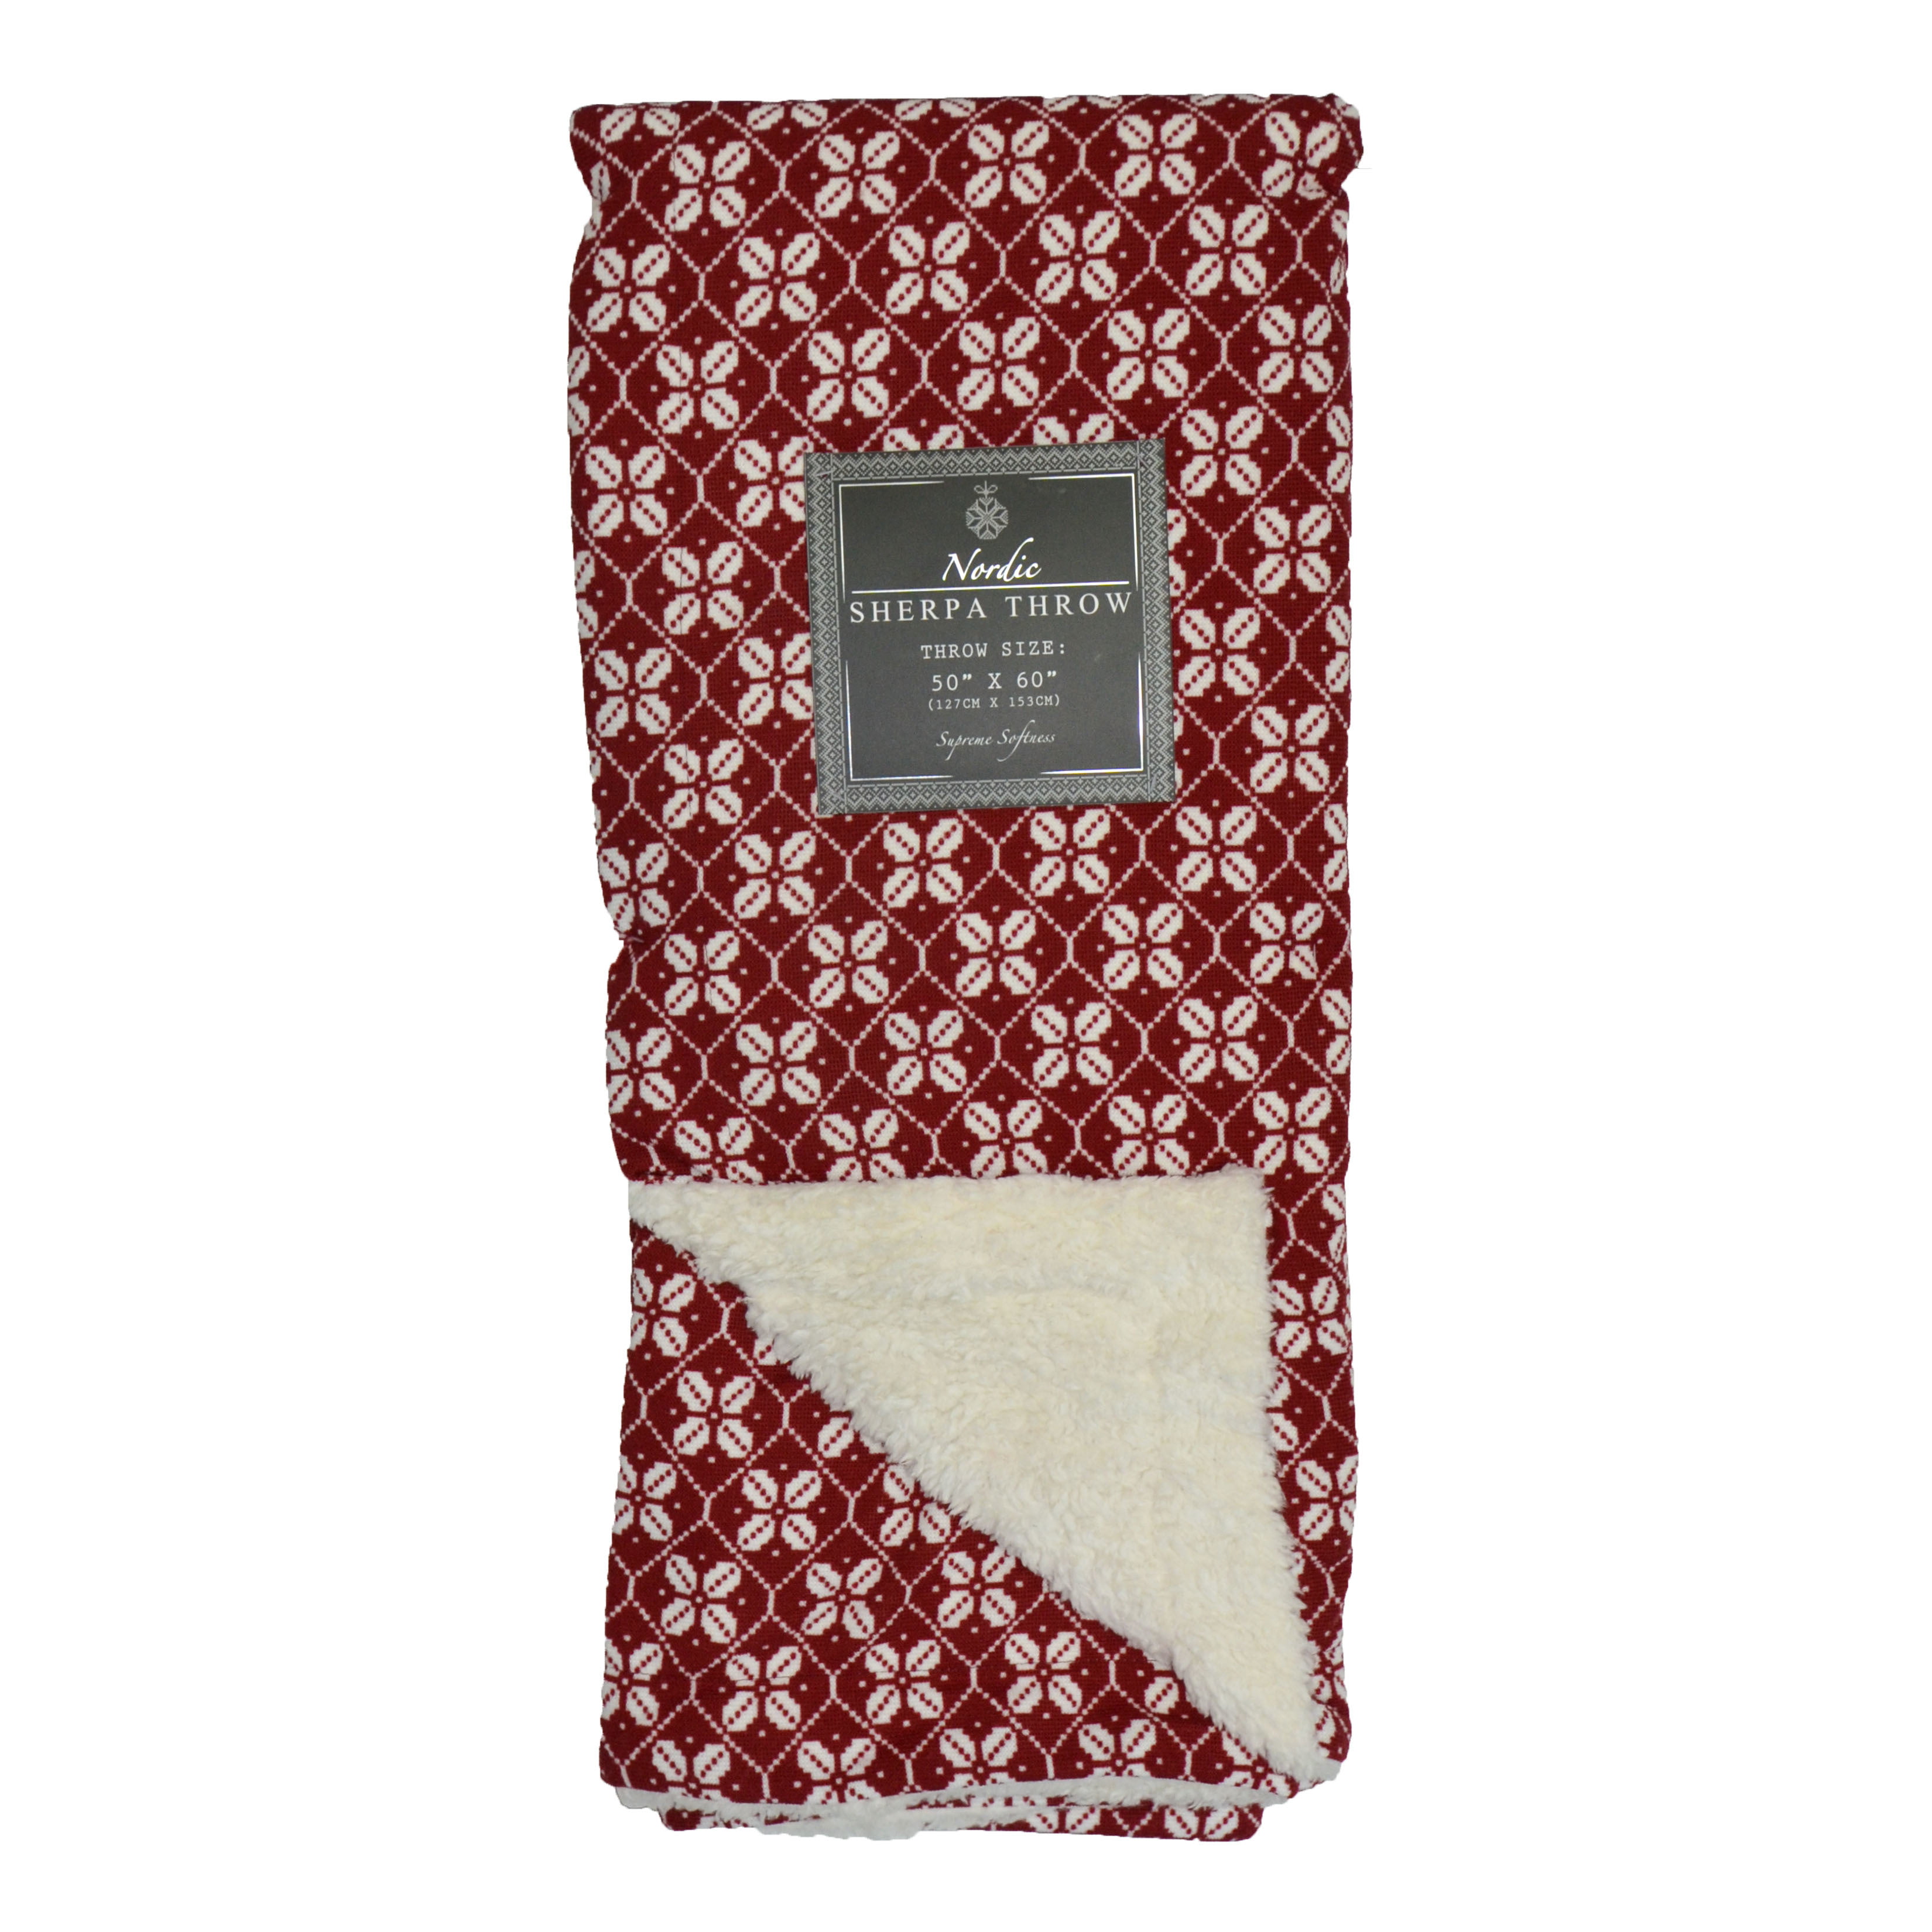 Cosmopolitan Decorative Throw Blanket Soft Plush Modern Geometric Patterned NWOP